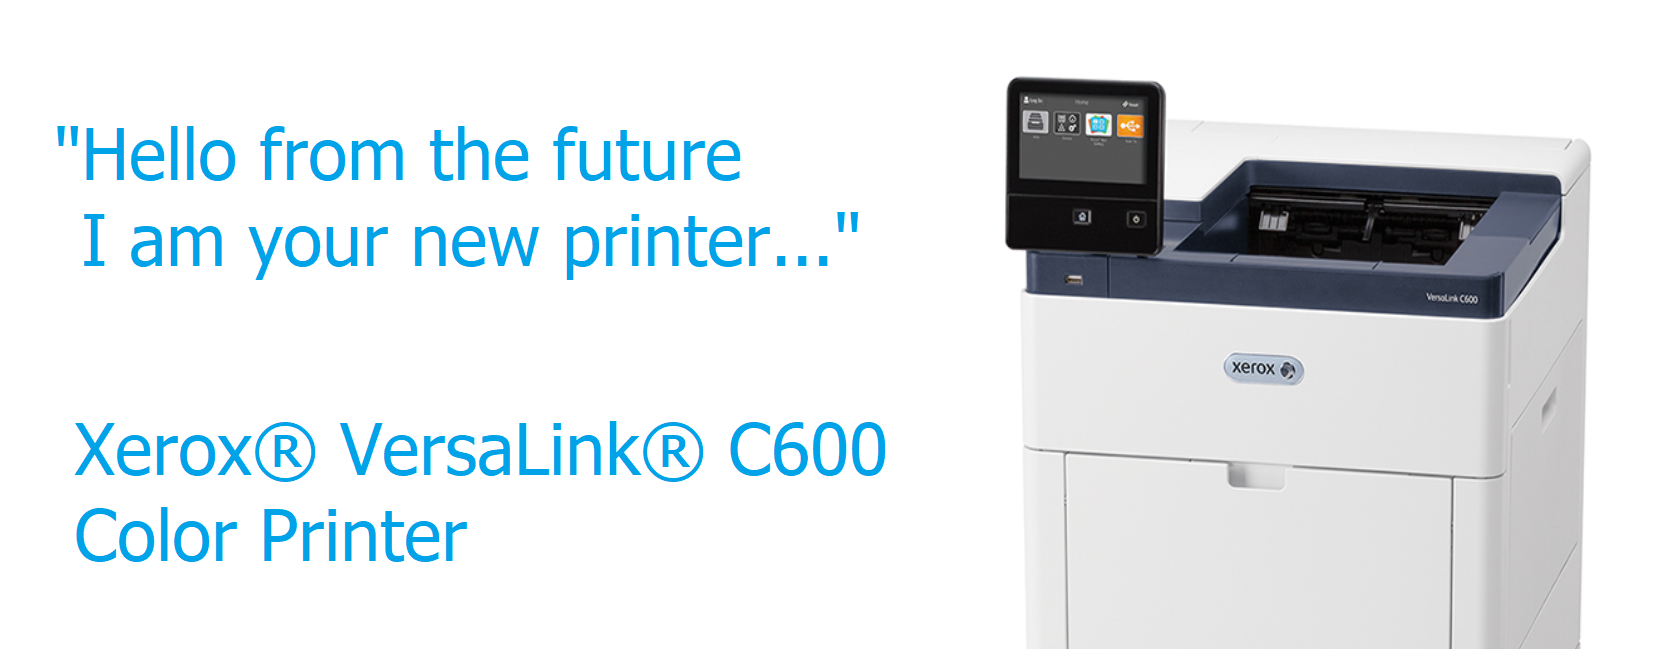 Xerox VersaLink Printer C600 by Grafimedia 